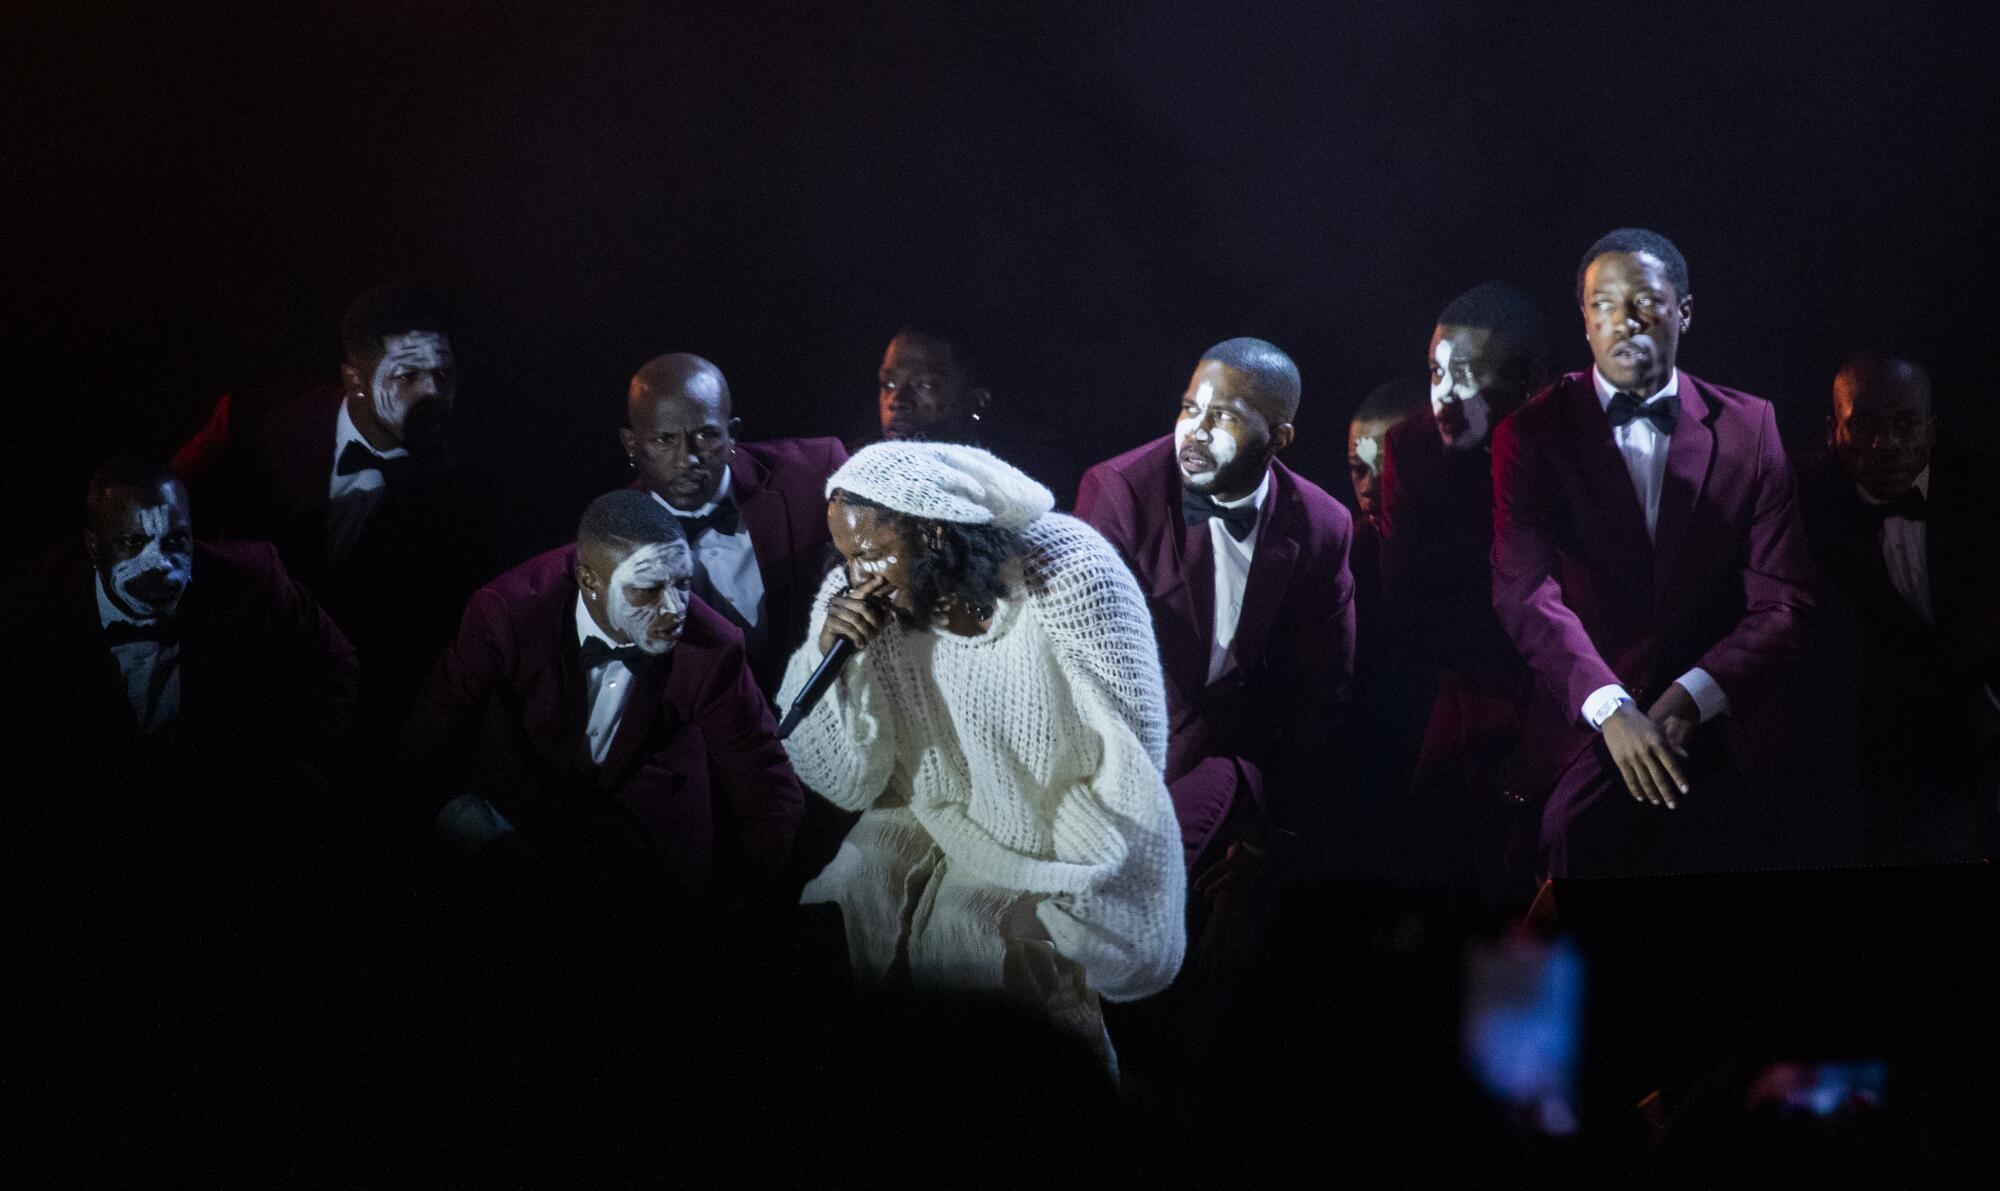 Friday’s headliner Kendrick Lamar performs at the Day N Vegas hip-hop music festival.